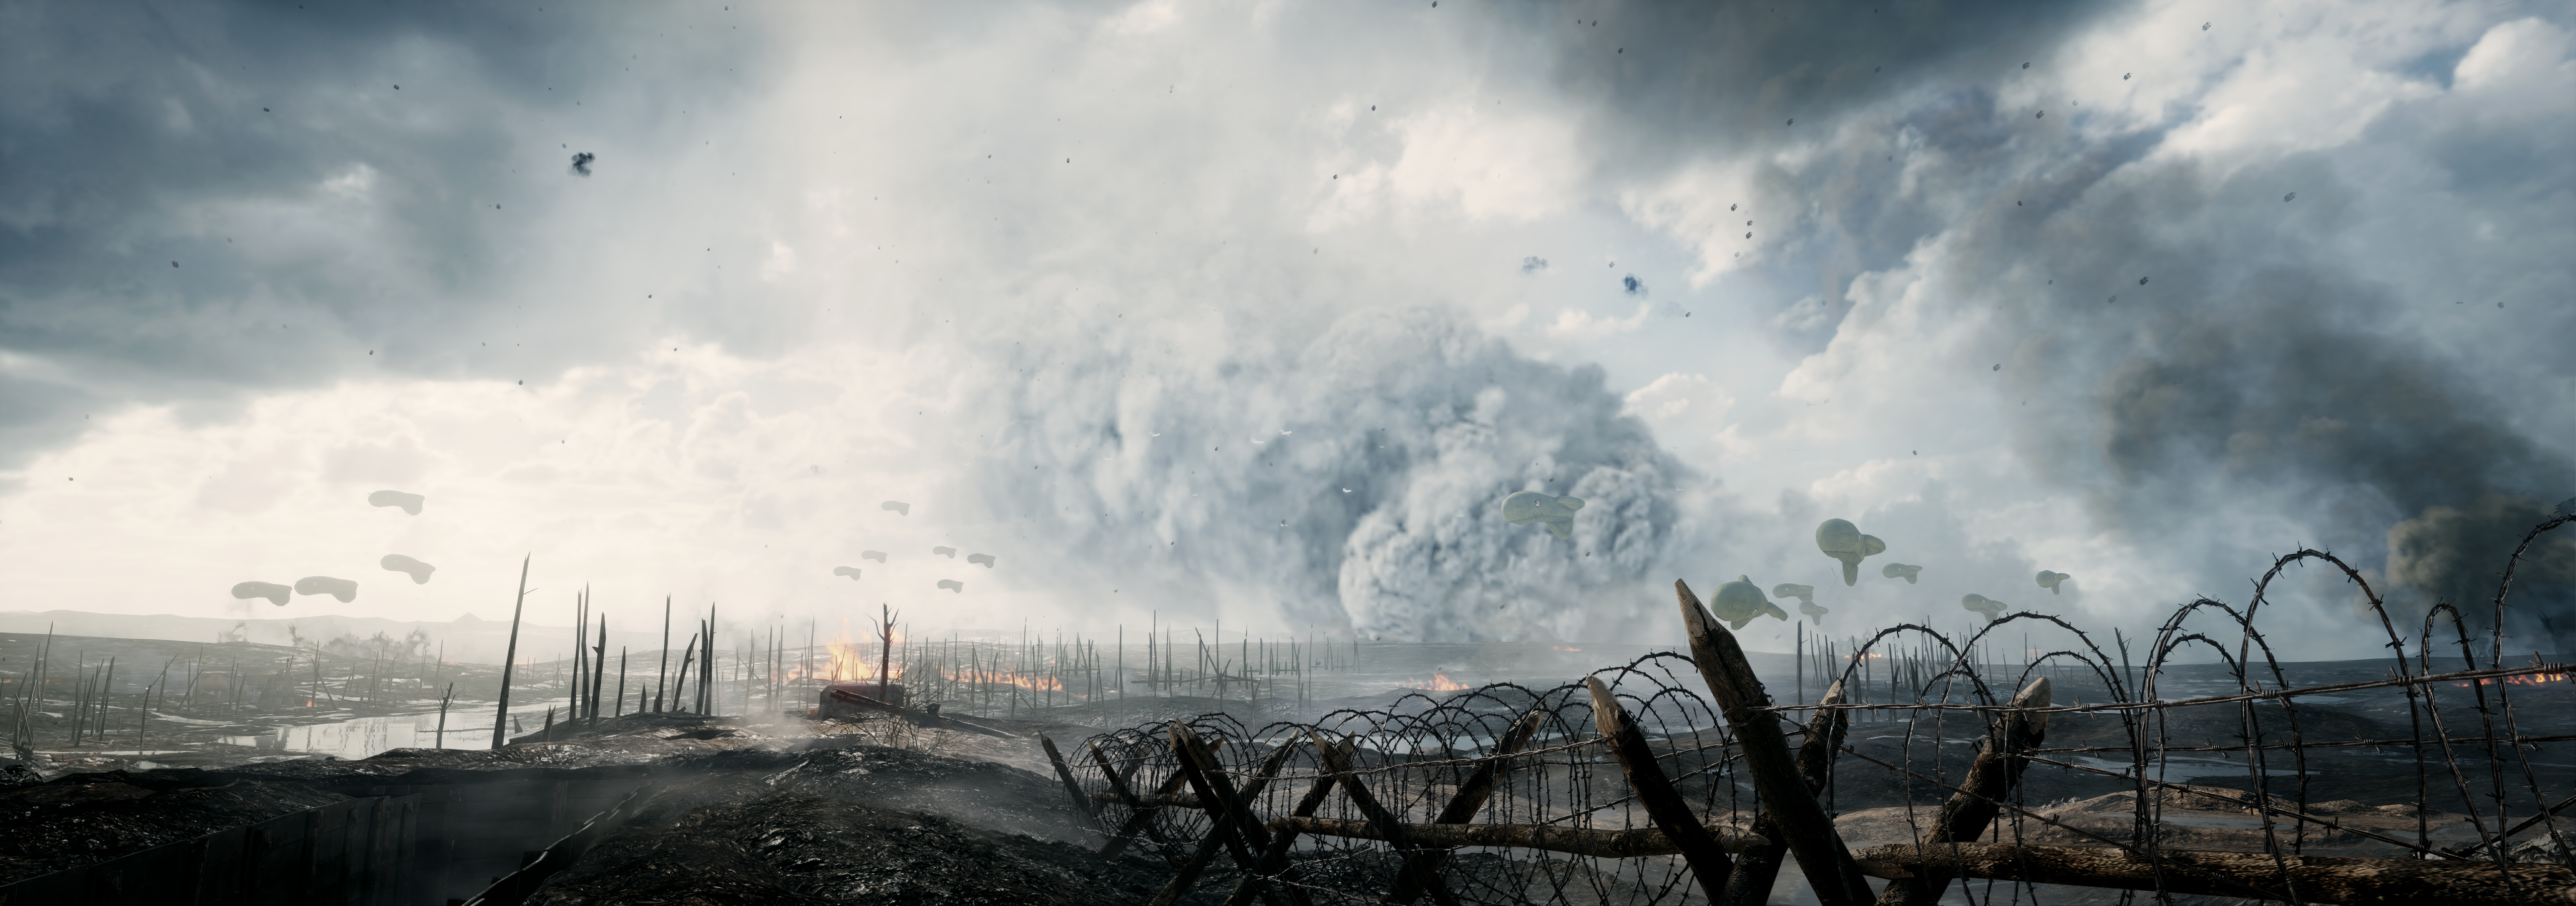 Battlefield 1 HD Wallpaper | Background Image | 5120x1800 | ID:726960